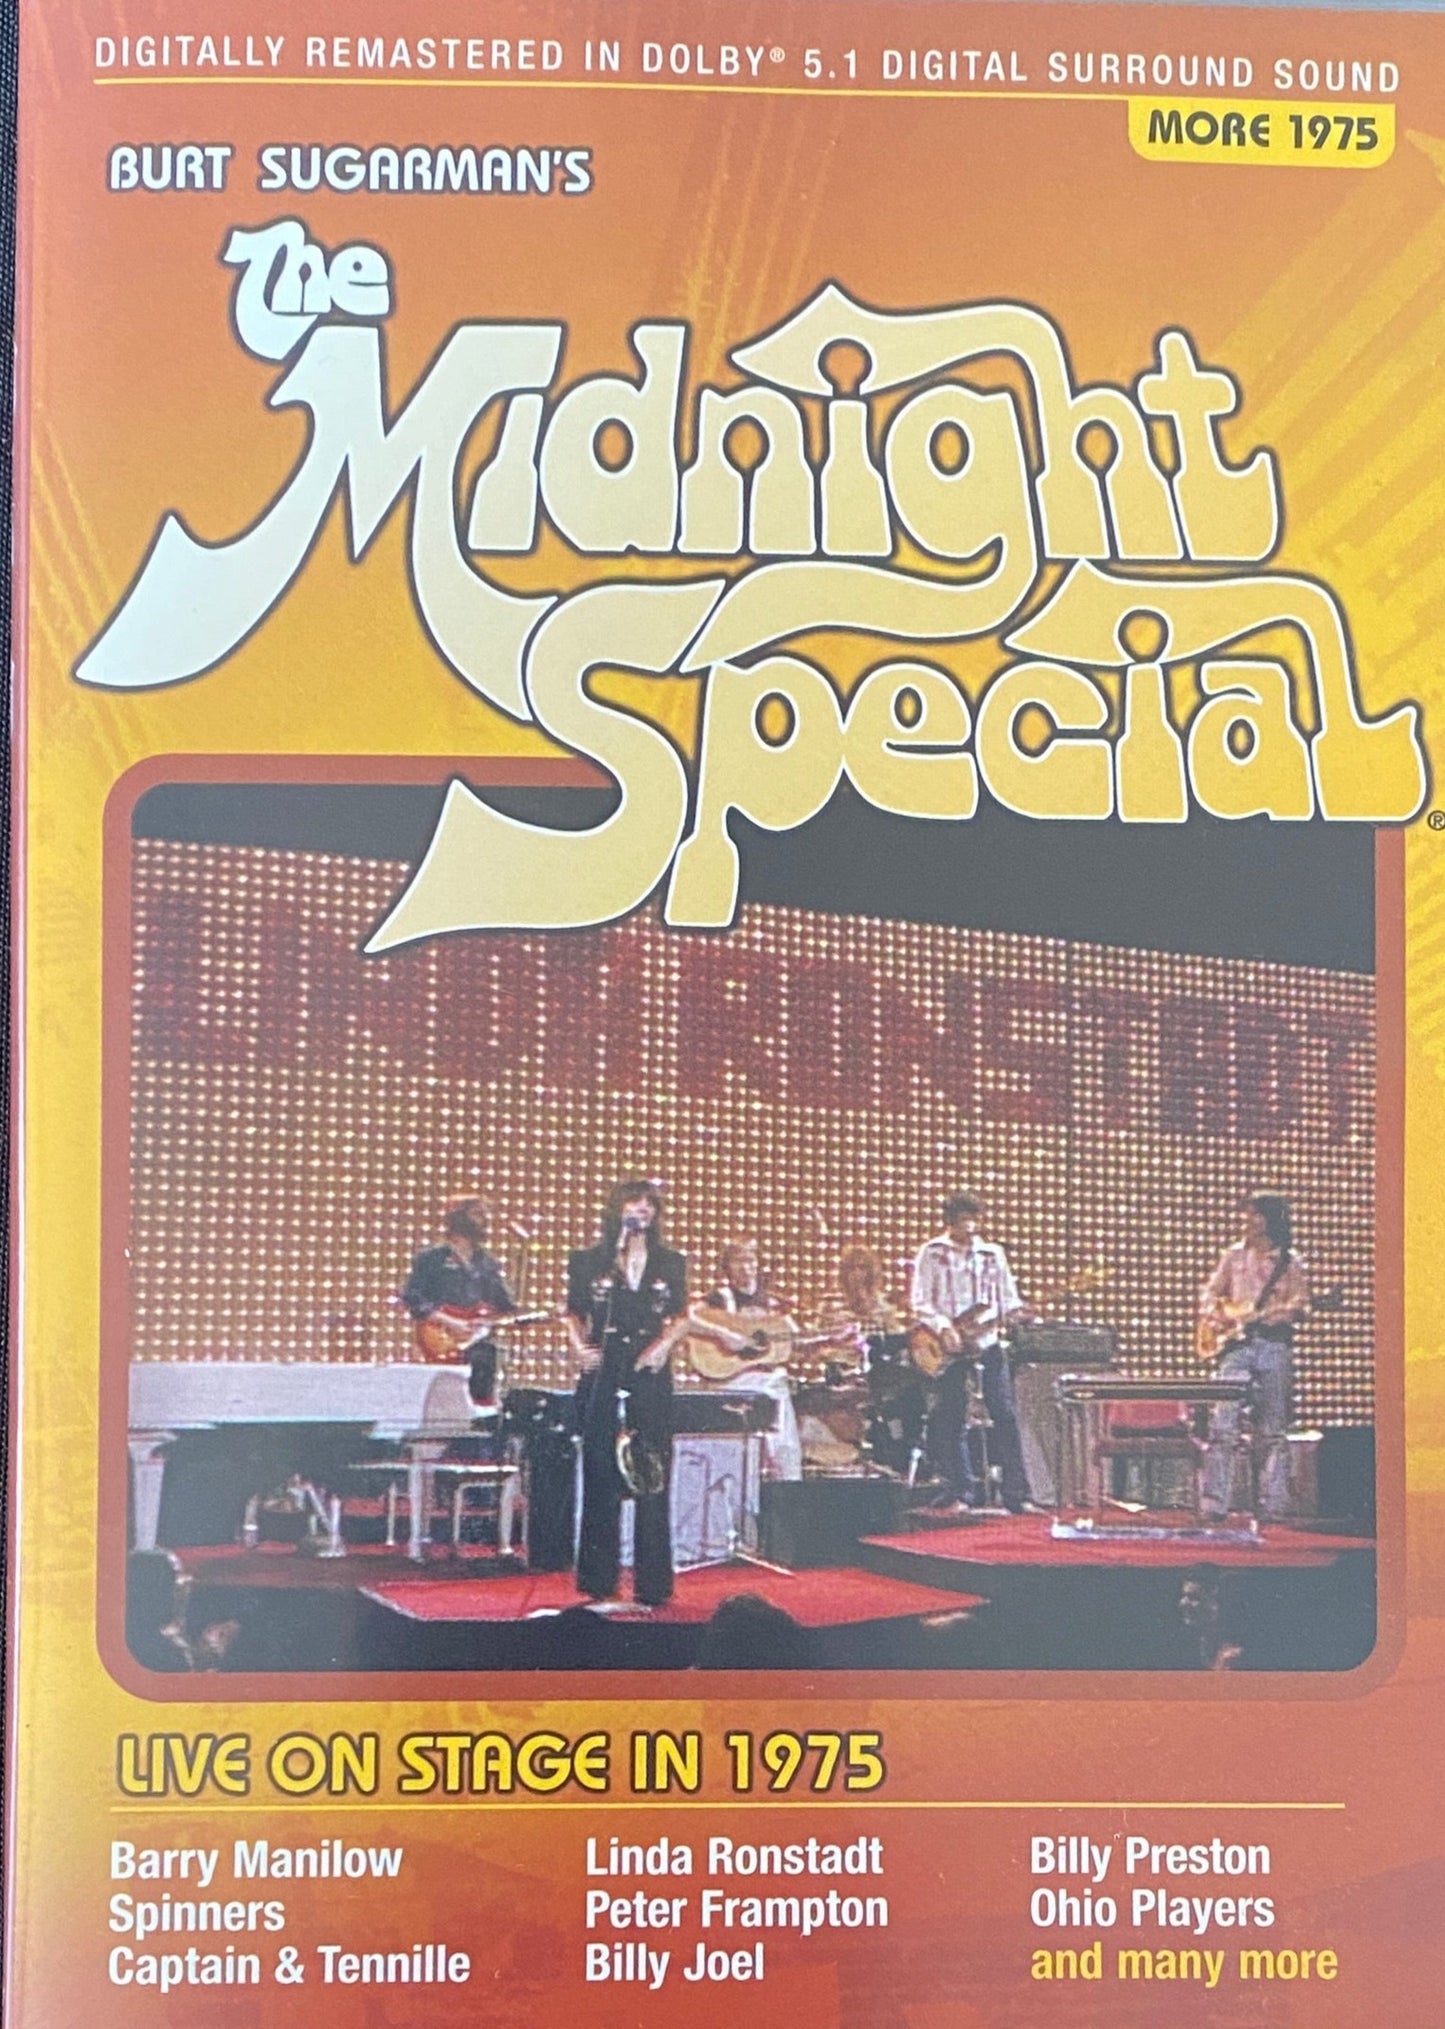 Burt Sugarman's The Midnight Special Live - More 1975